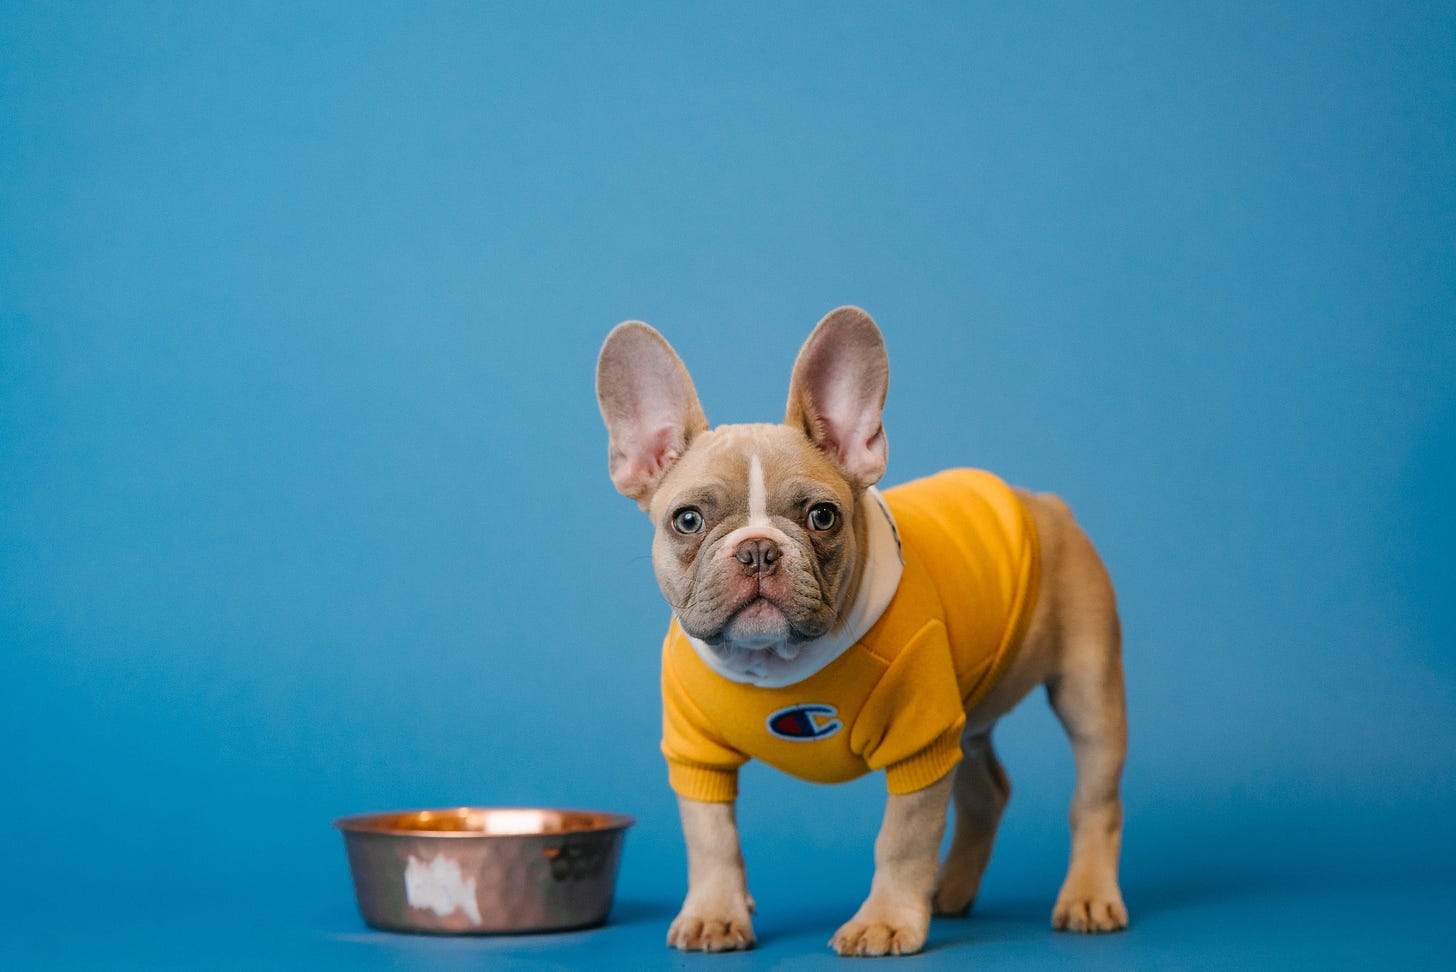 Pug dog wearing a Champion shirt standing next to dog food bowl